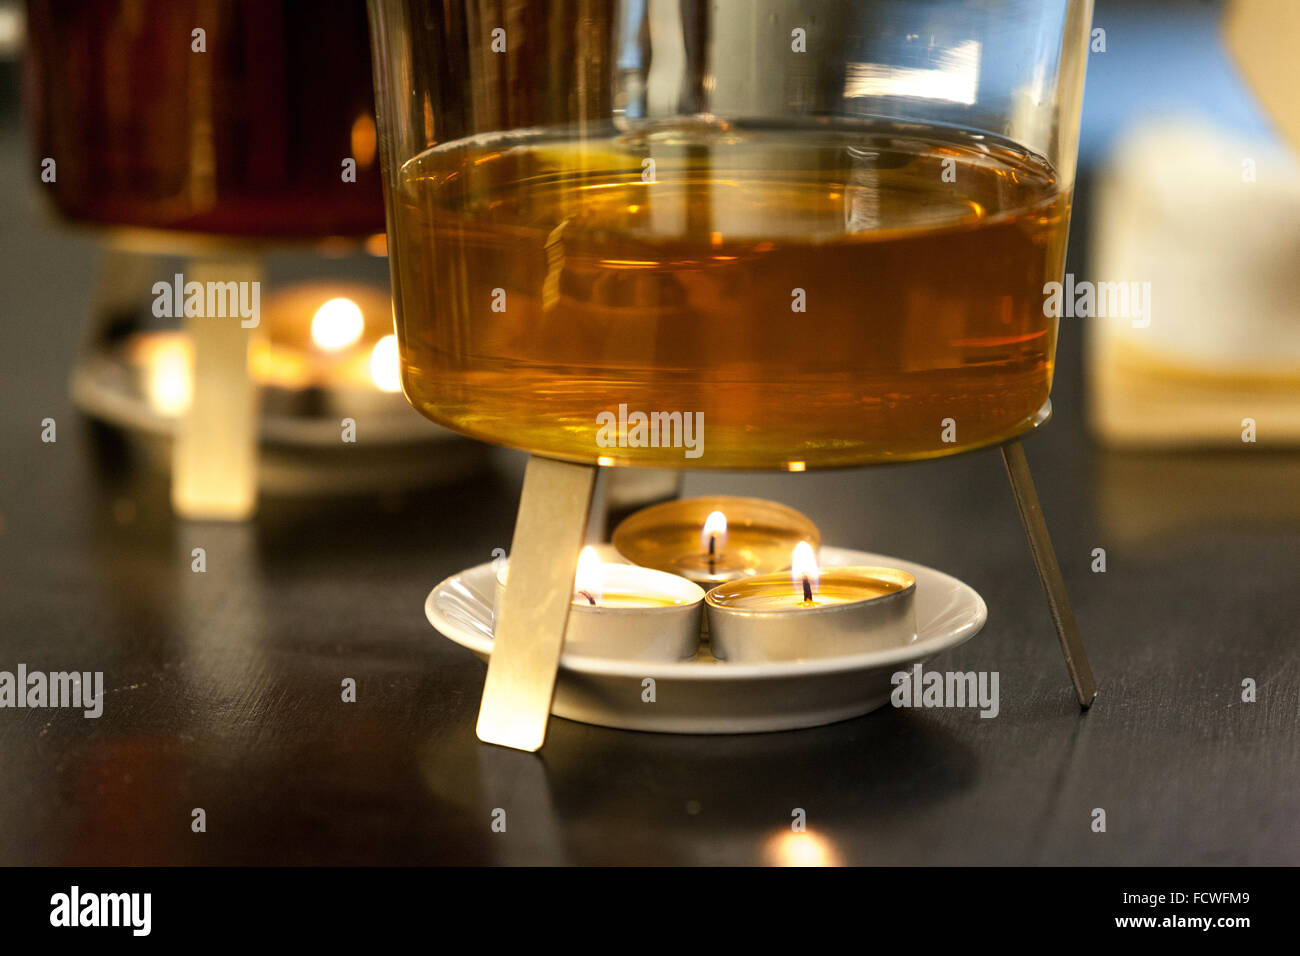 Burning candle warming the teapot Stock Photo